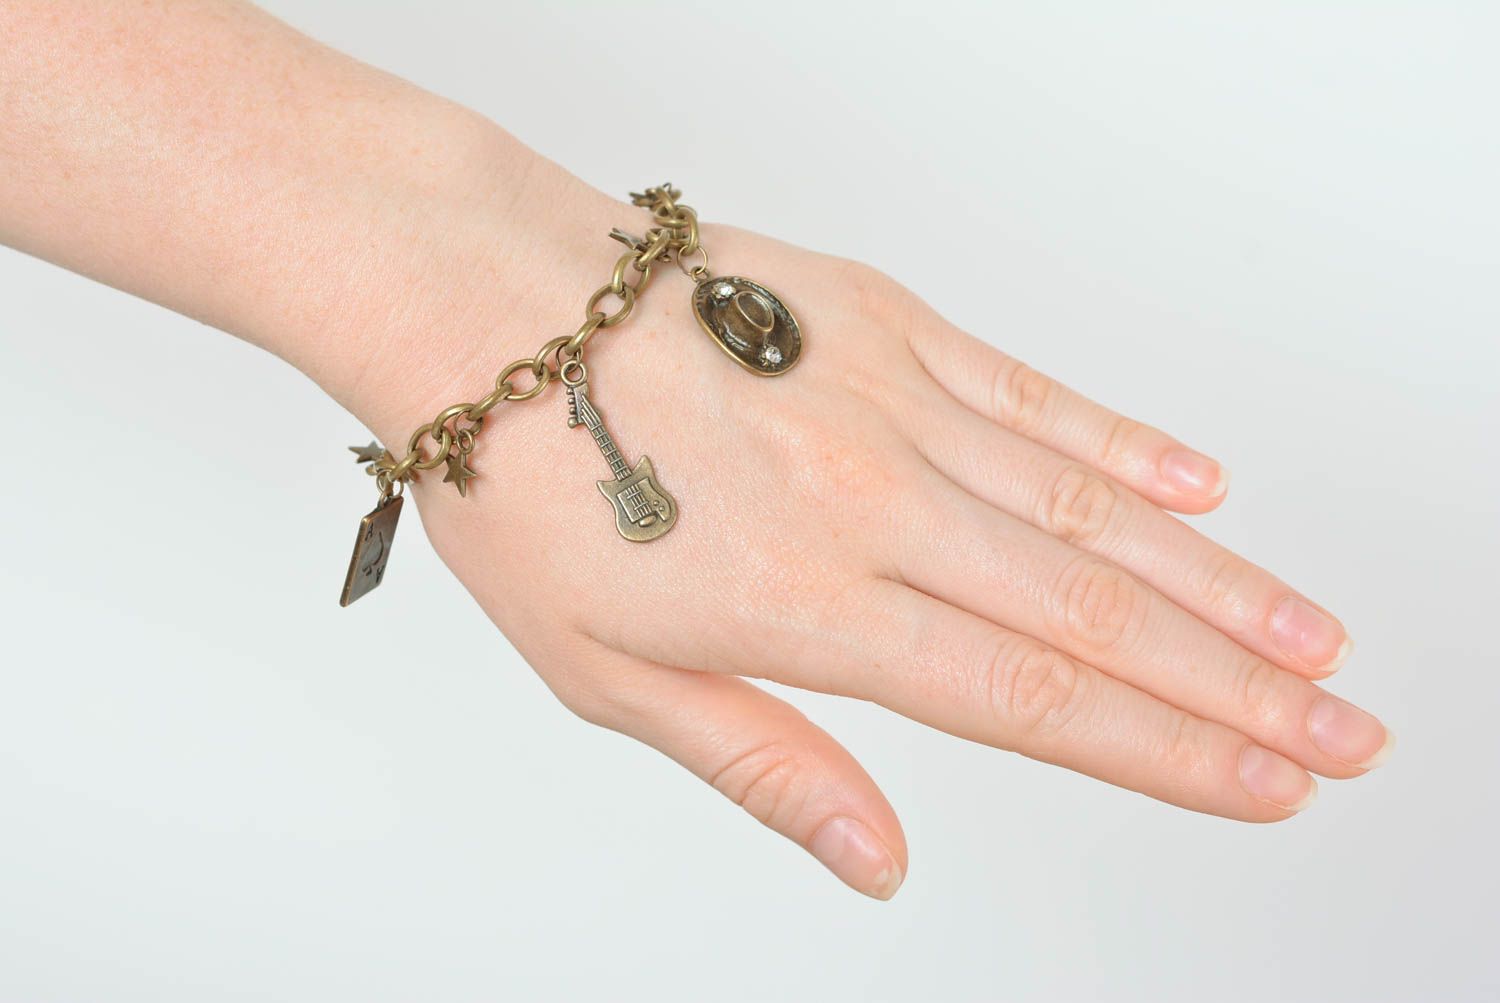 Chain bracelet metal jewelry handmade bracelet charm bracelet gifts for girl photo 4